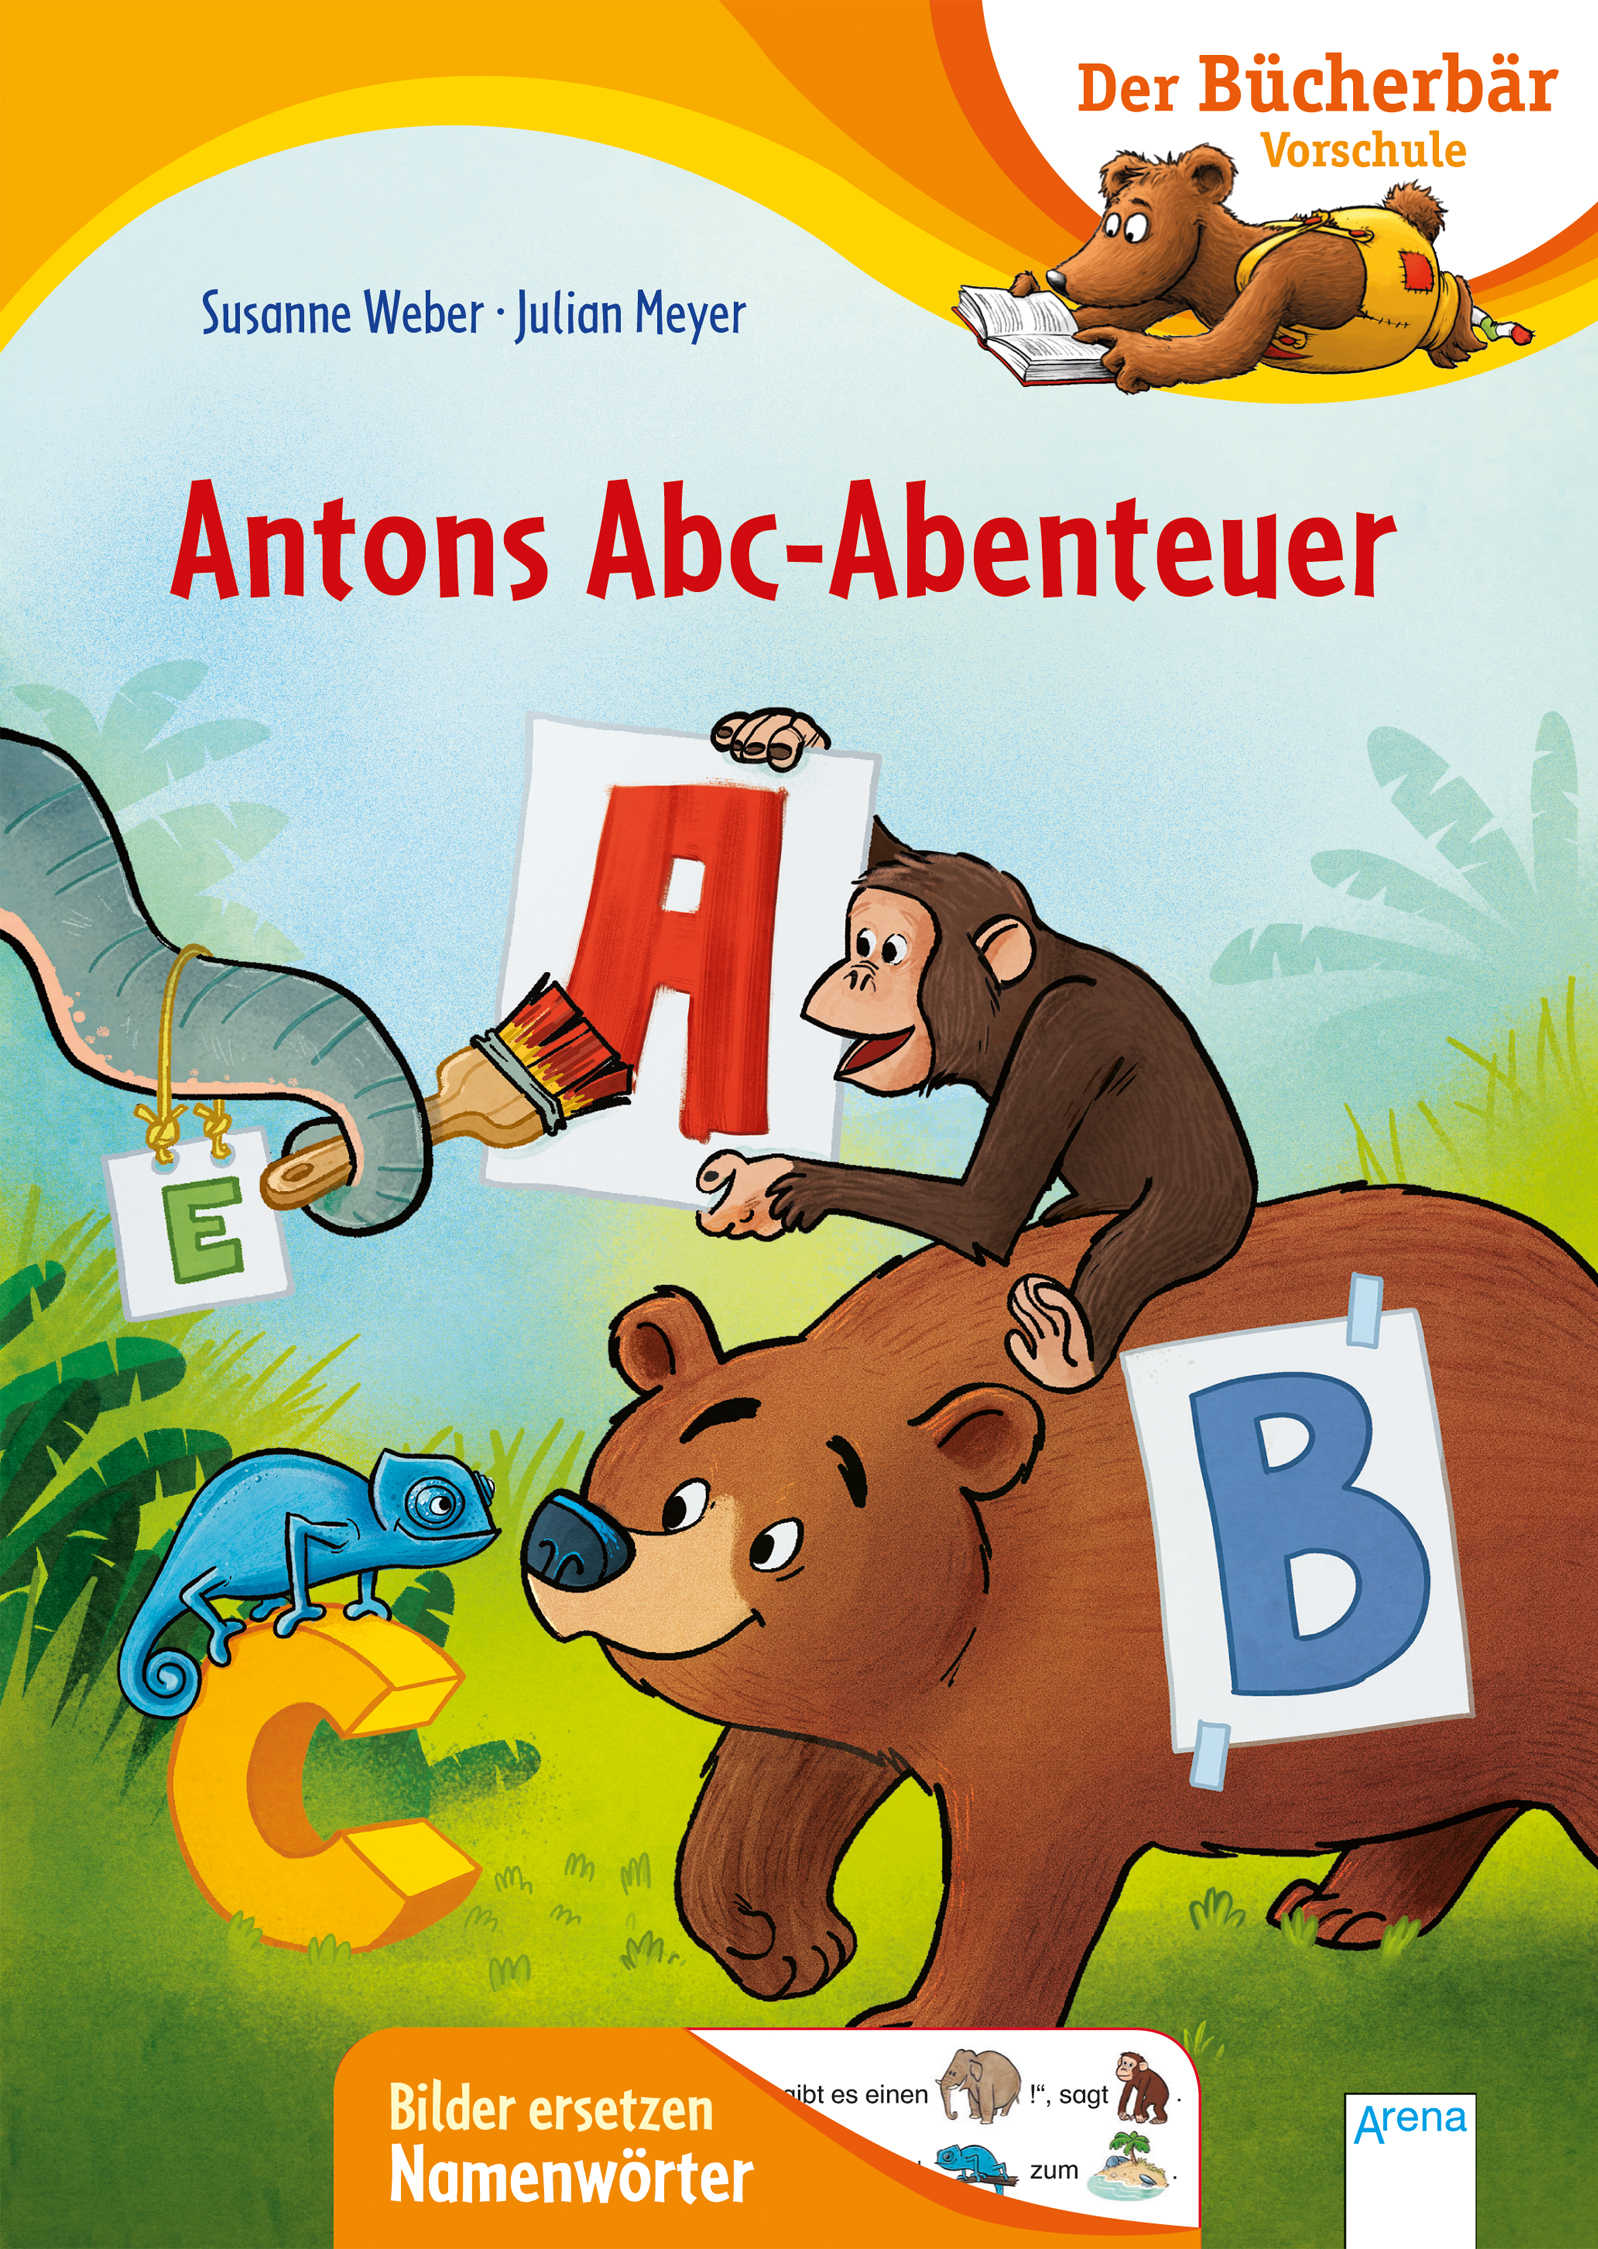 Buchcover "Antons Abc-Abenteuer"